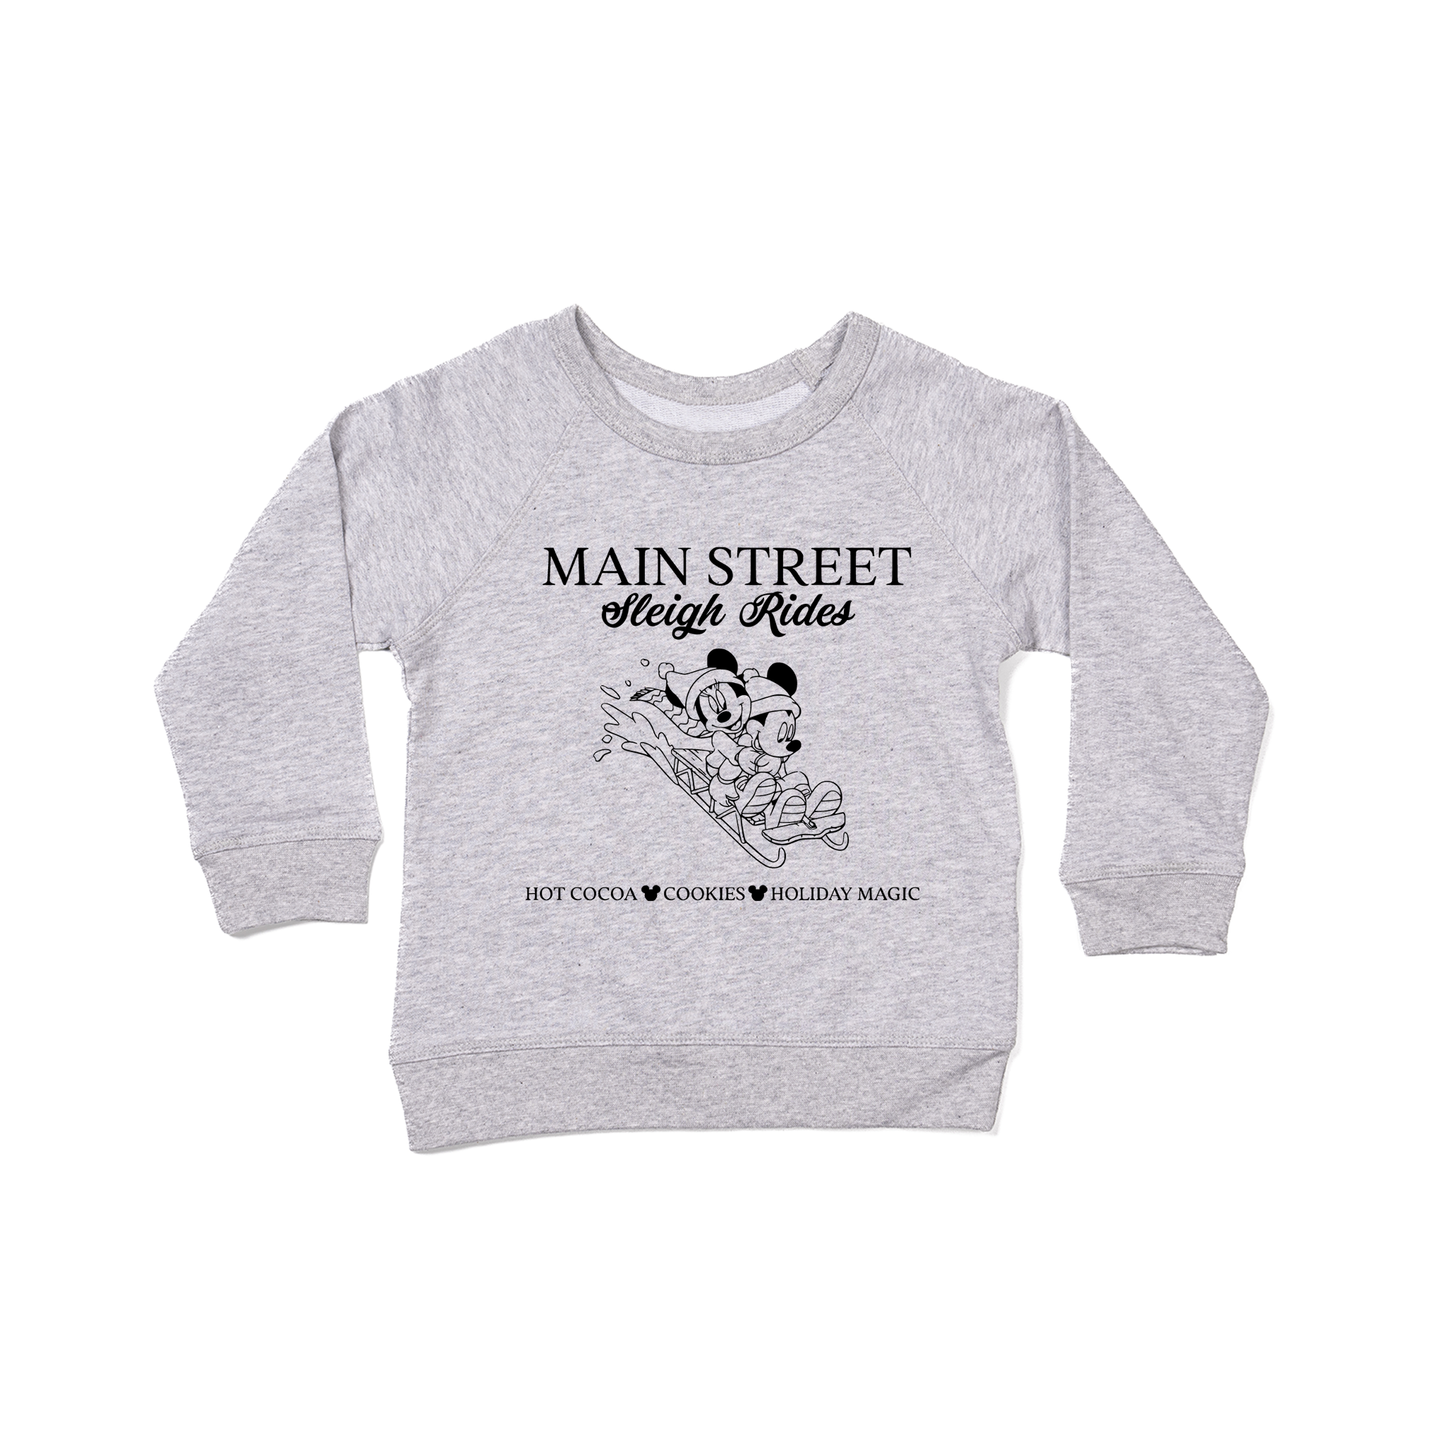 Main Street Sleigh Rides (Black) - Kids Sweatshirt (Heather Gray)